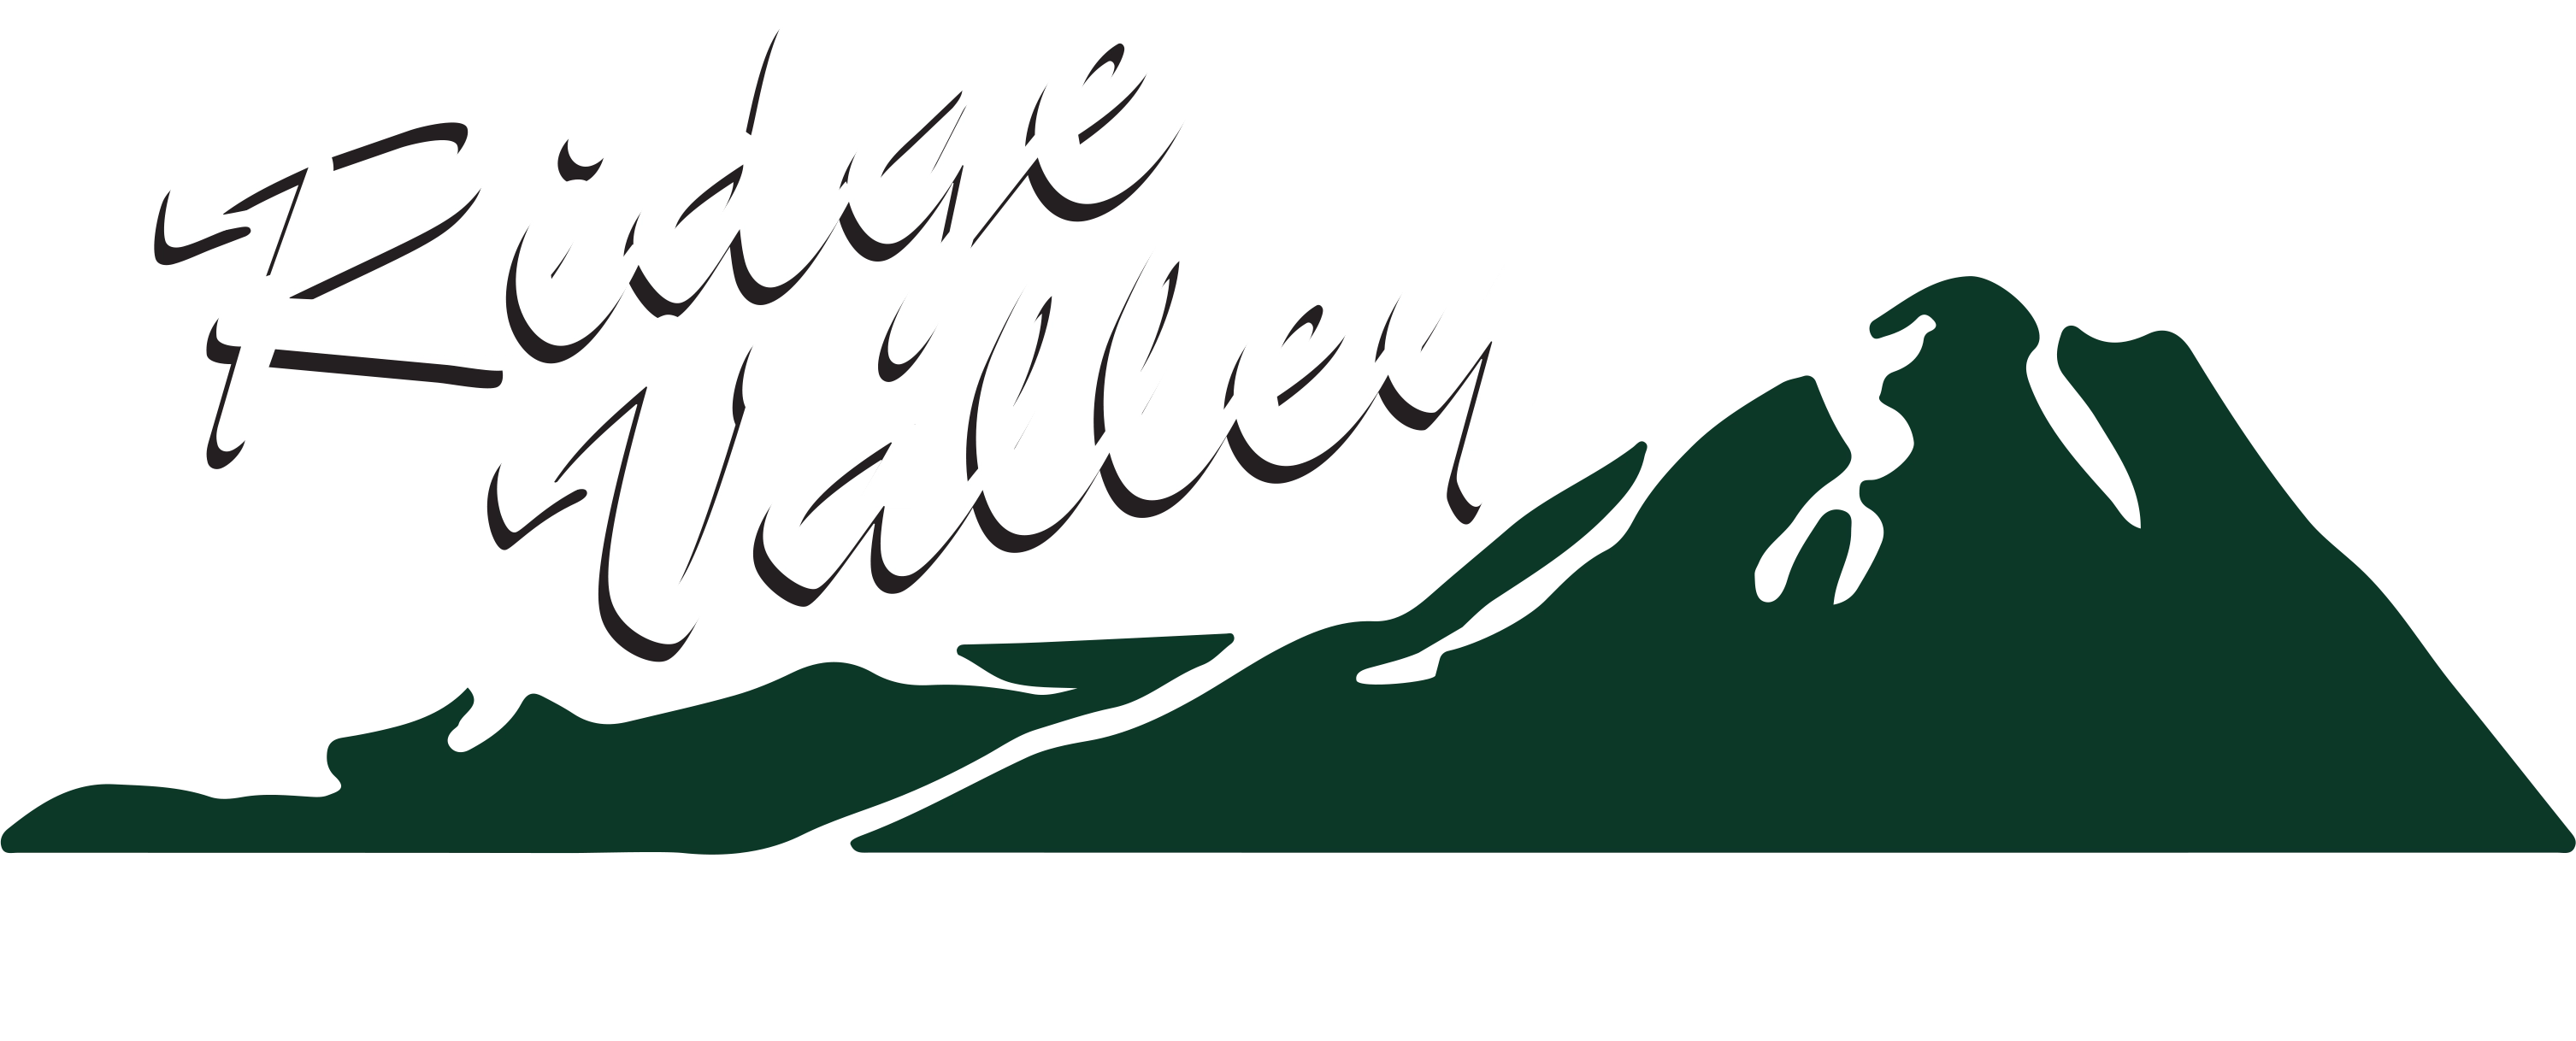 Ridge Valley Heat & Air Logo